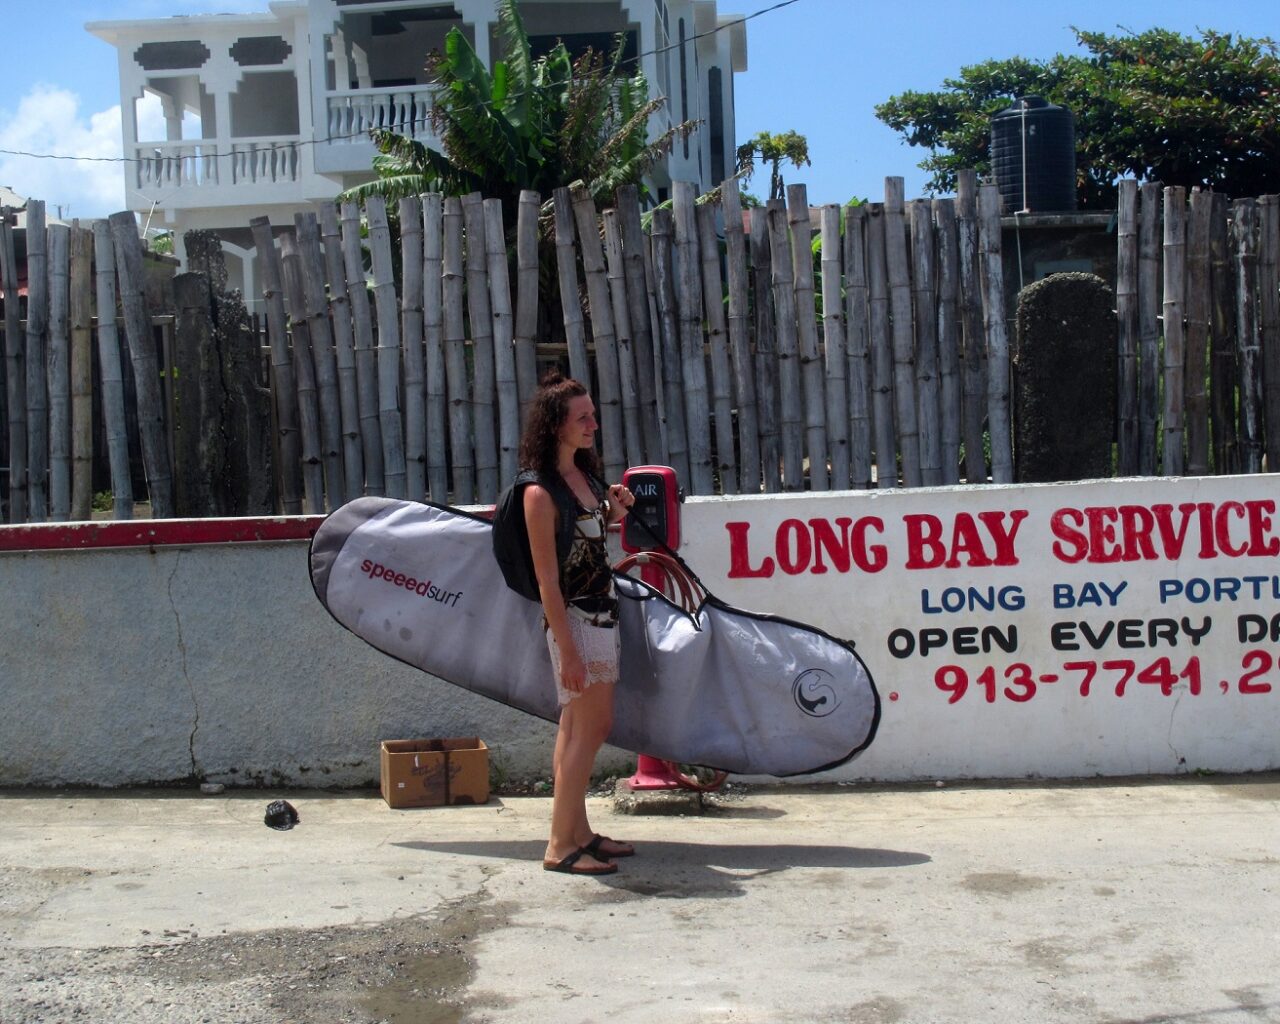 Jessica-met-surfplank-in-tas-Jamaica